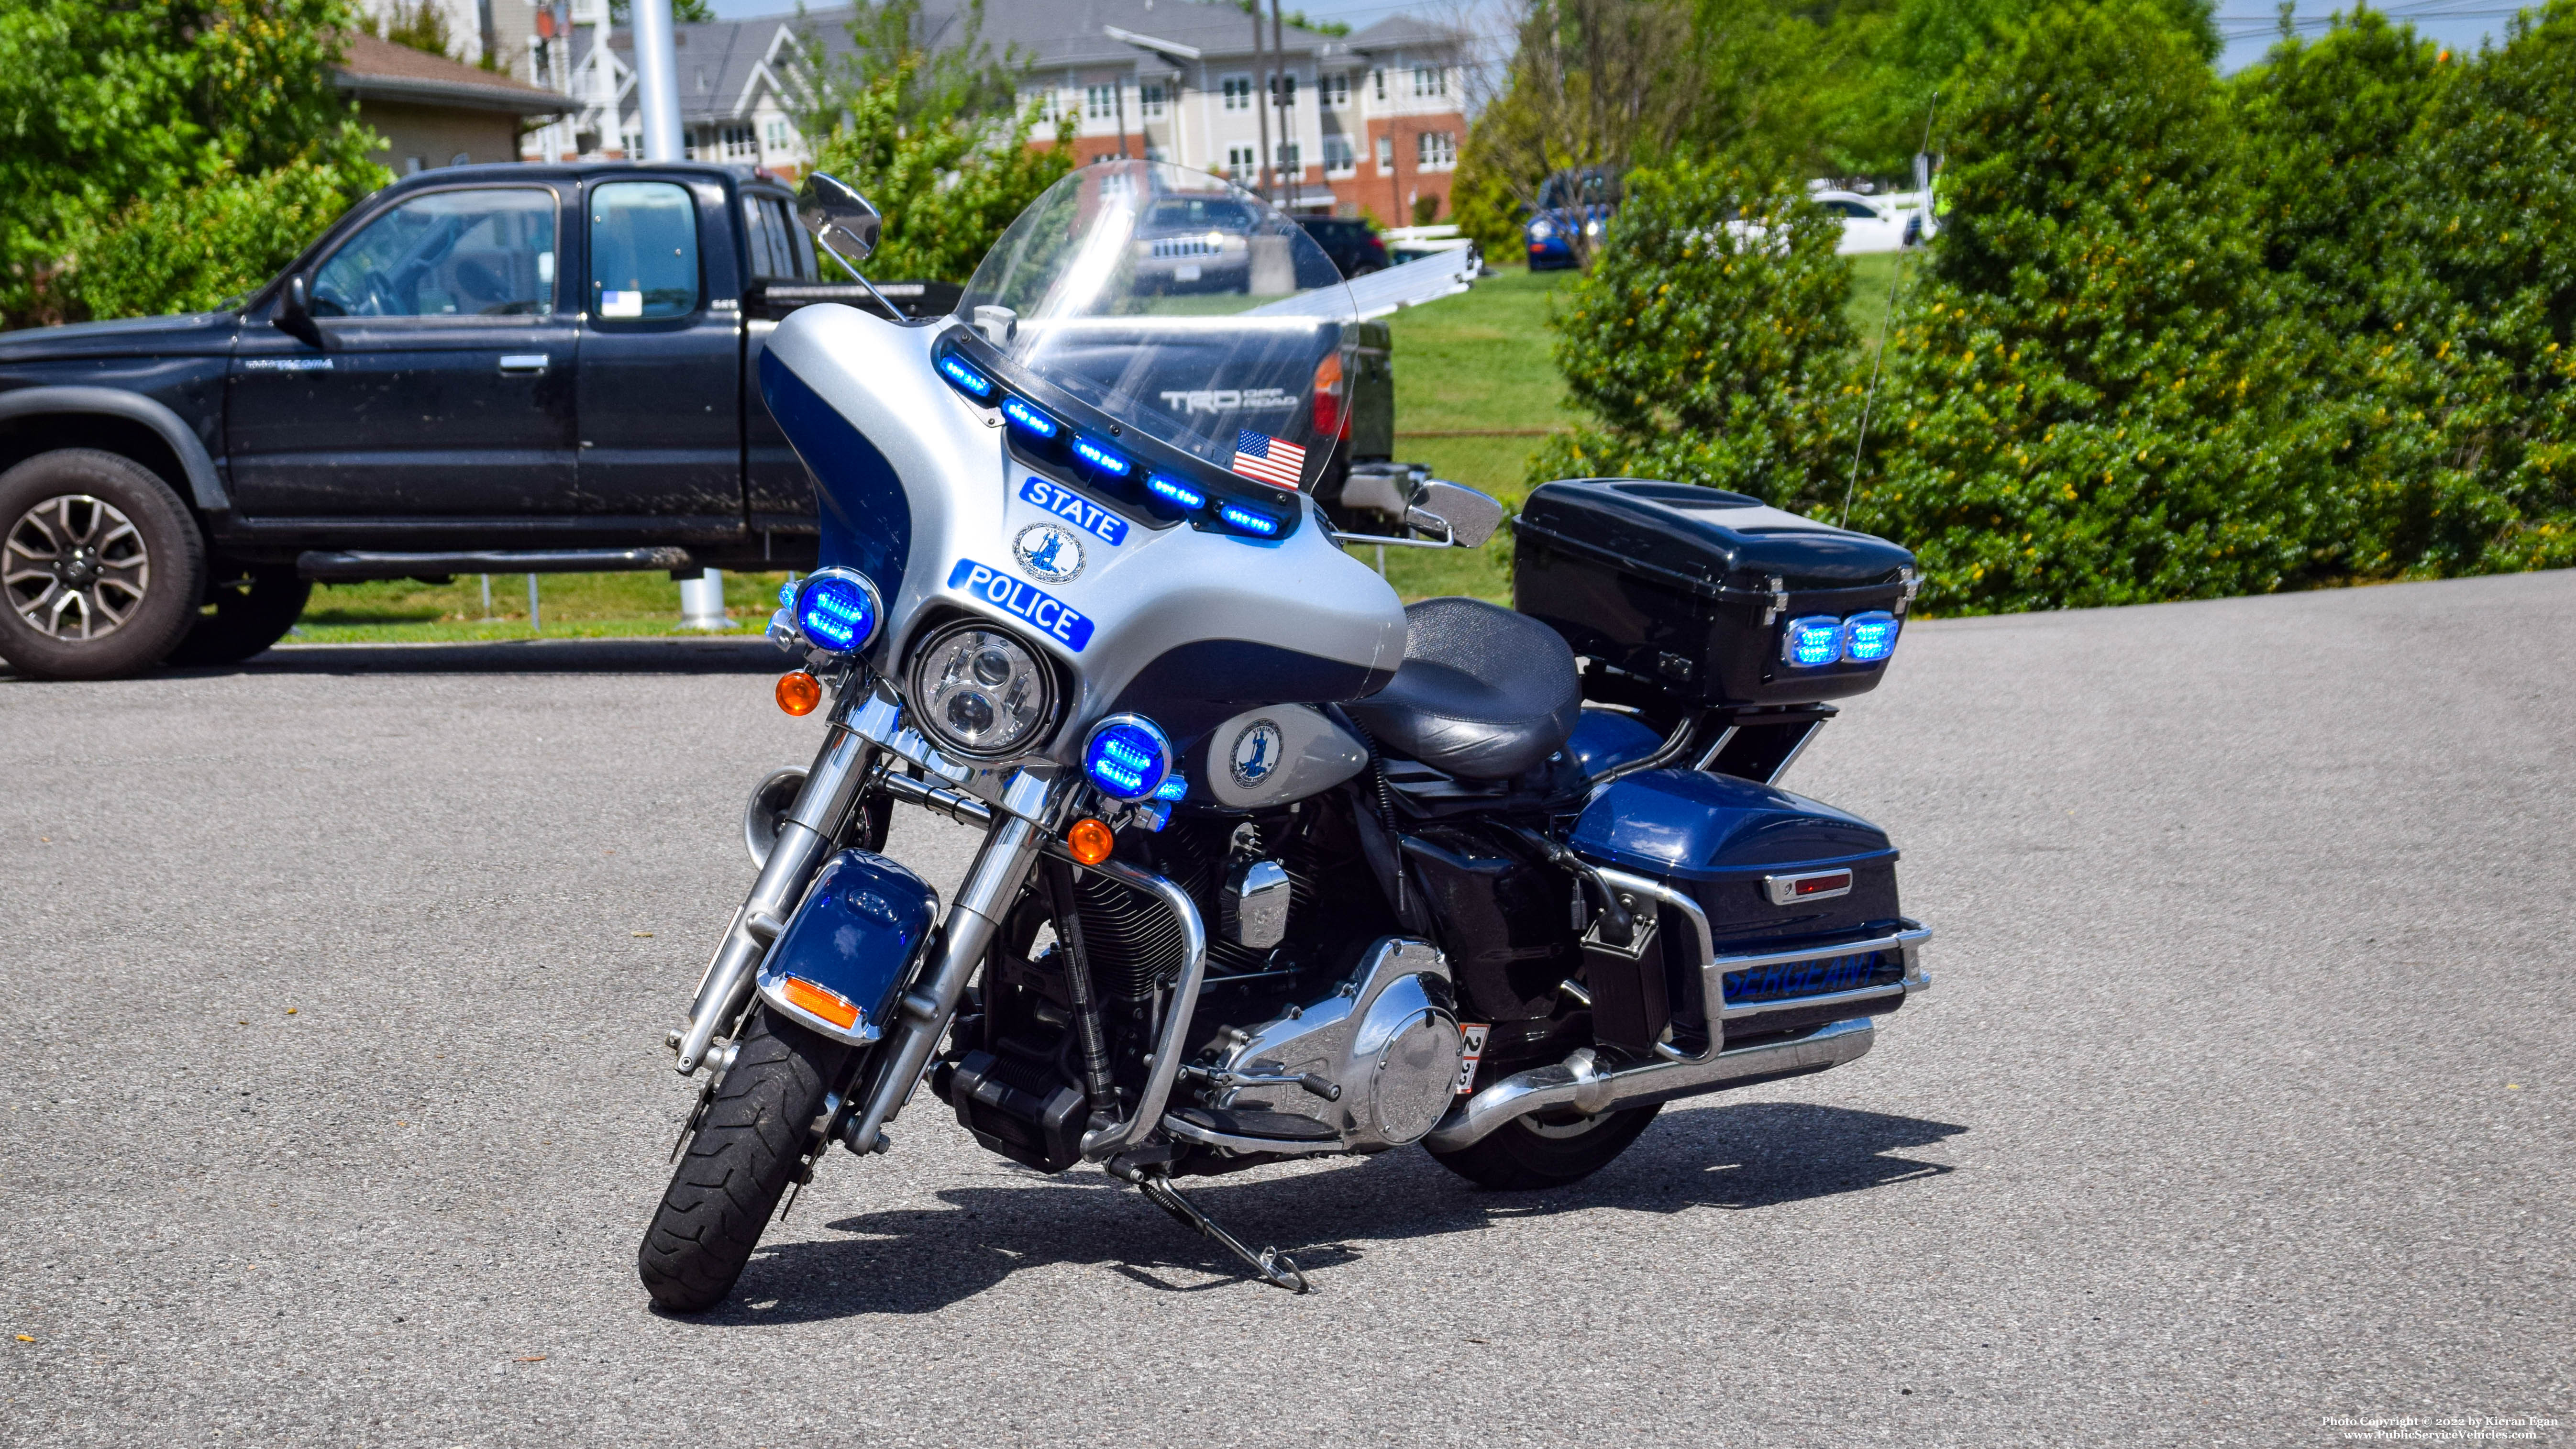 A photo  of Virginia State Police
            Motorcycle 23, a 2016 Harley Davidson Electra Glide             taken by Kieran Egan